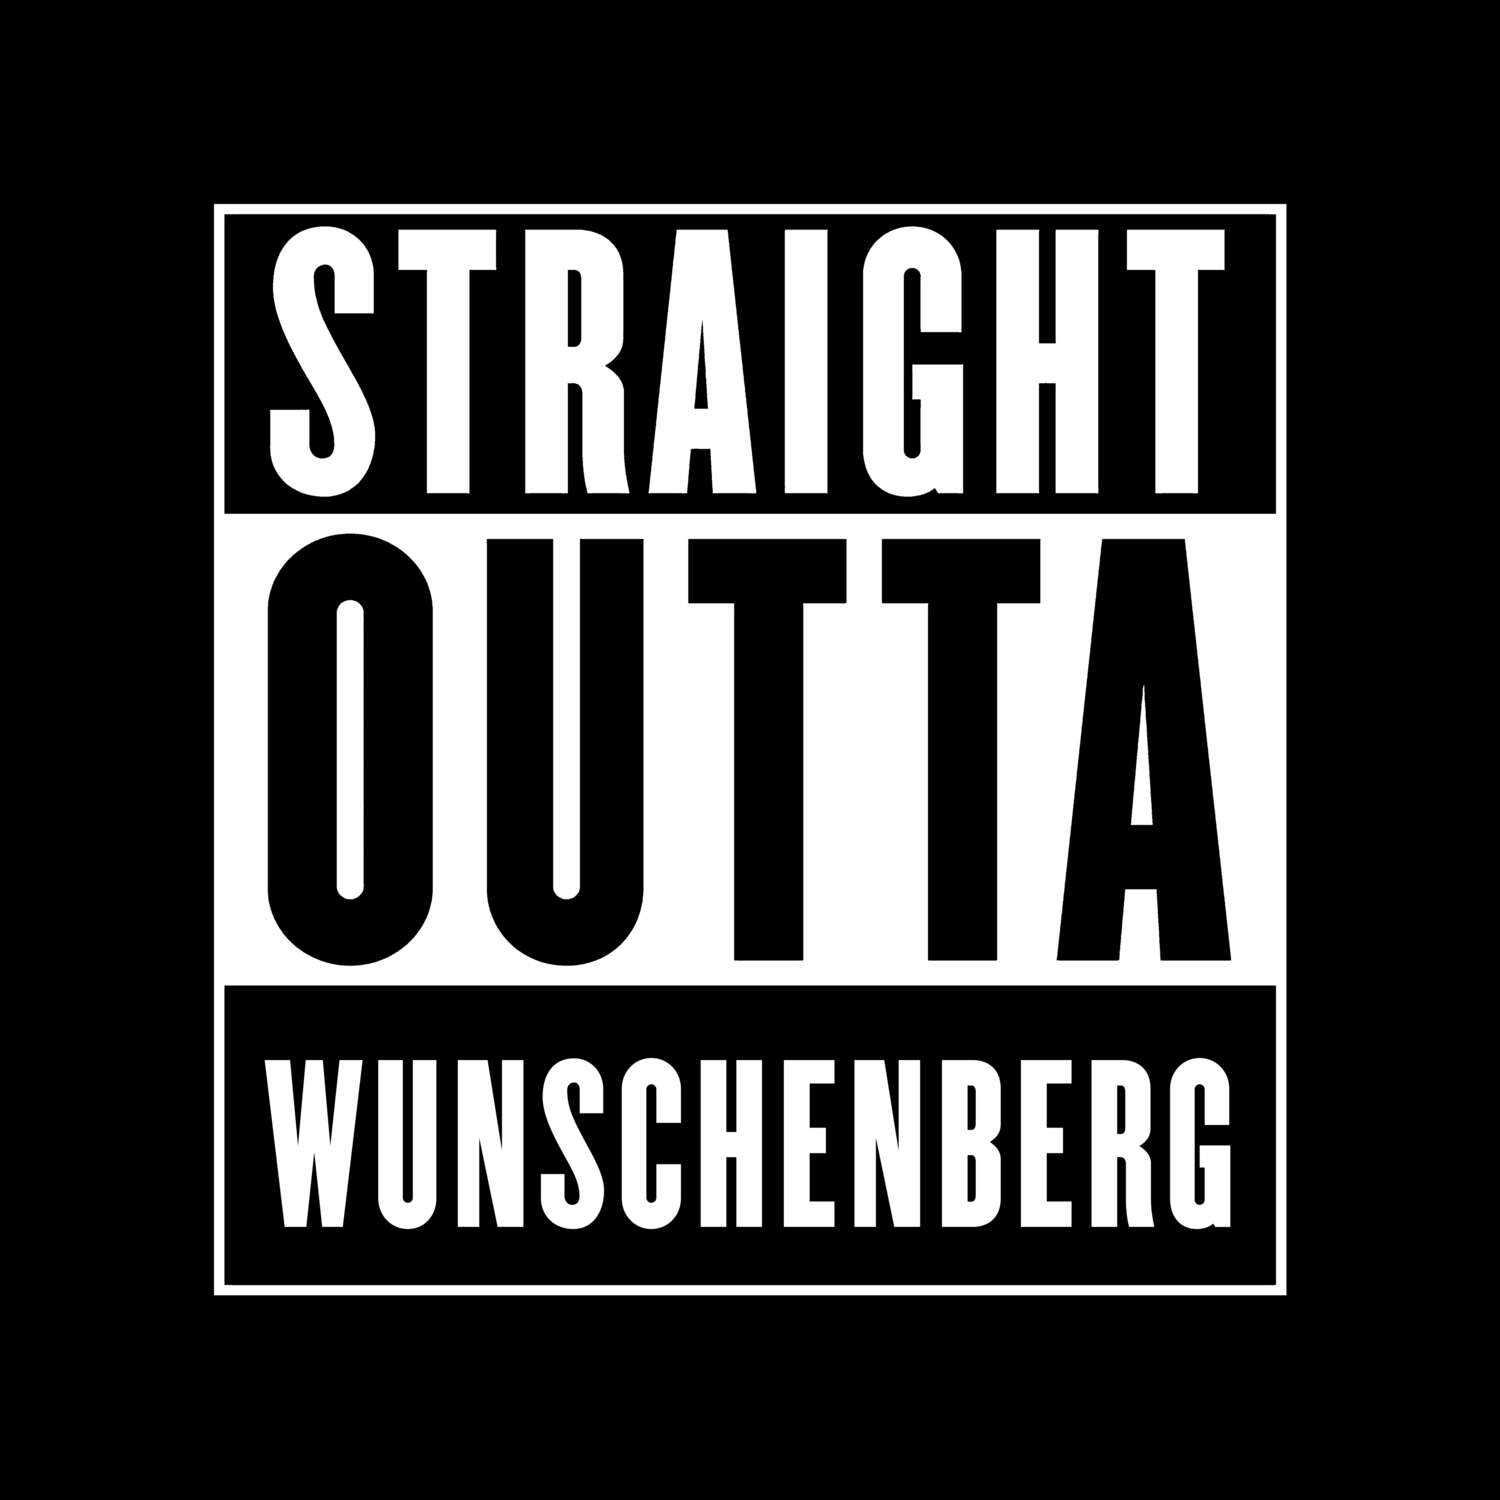 Wunschenberg T-Shirt »Straight Outta«